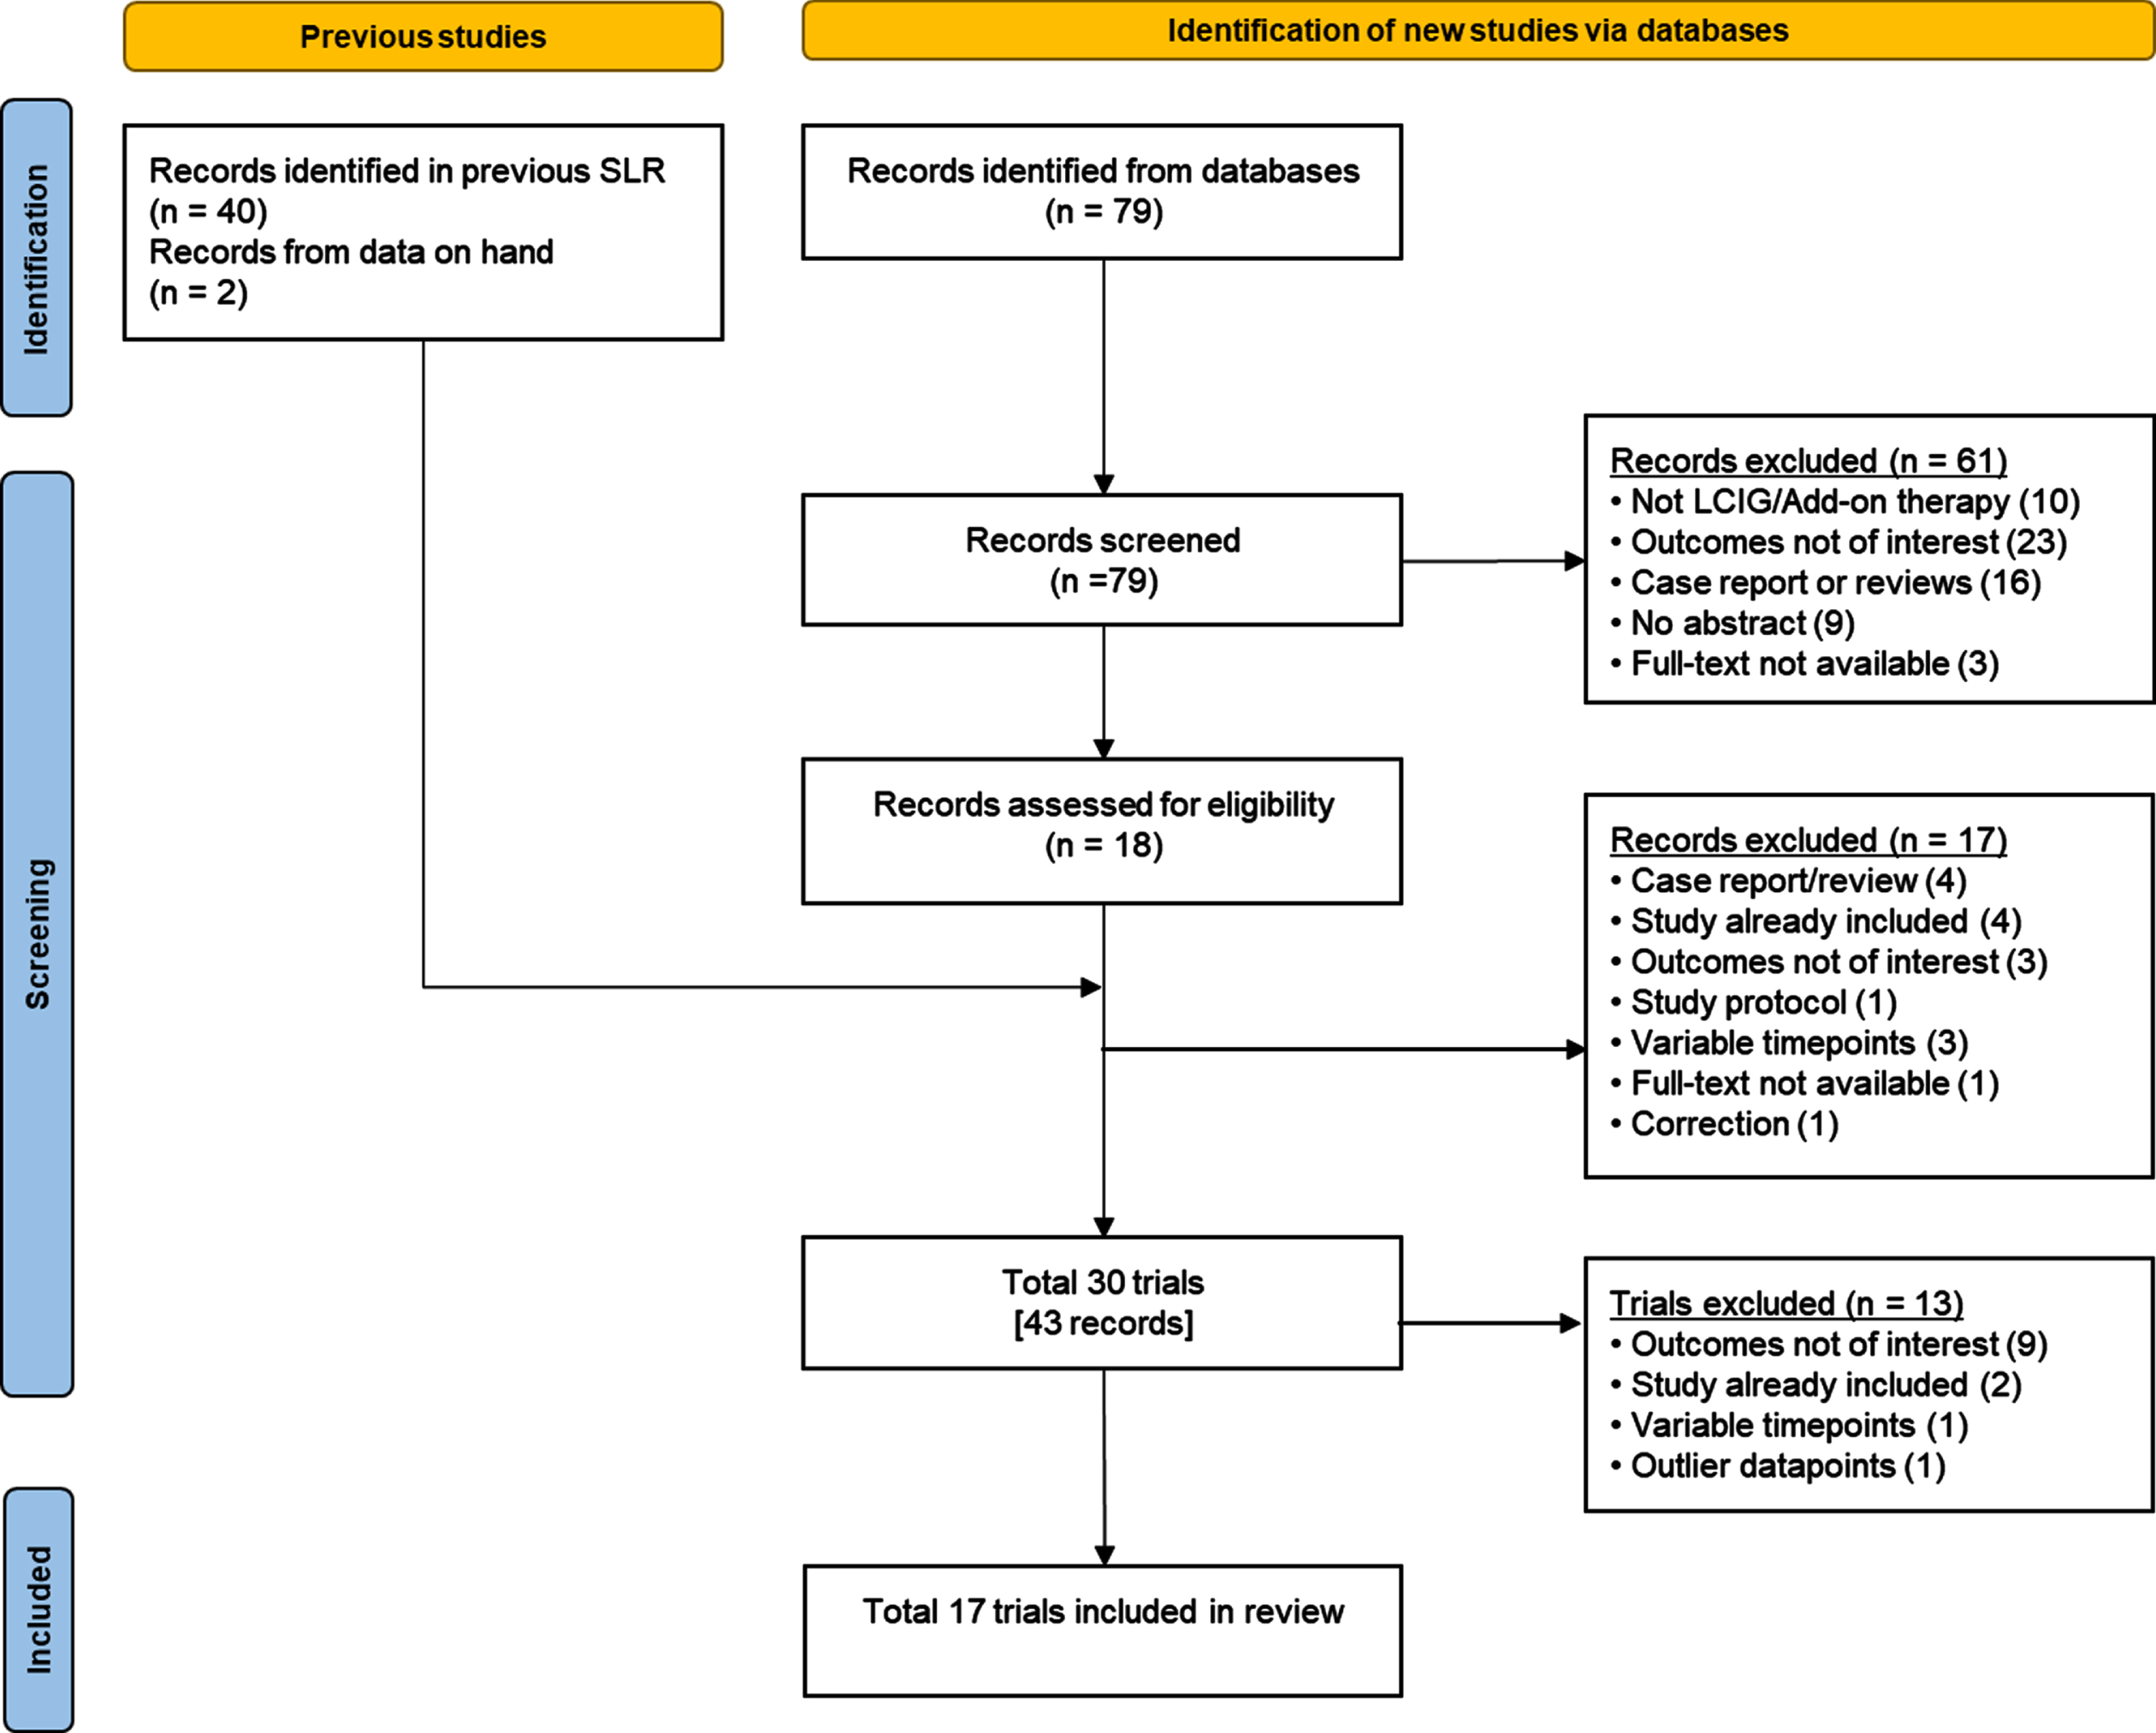 Study selection flow diagram. LCIG, levodopa-carbidopa intestinal gel; SLR, systematic literature review.